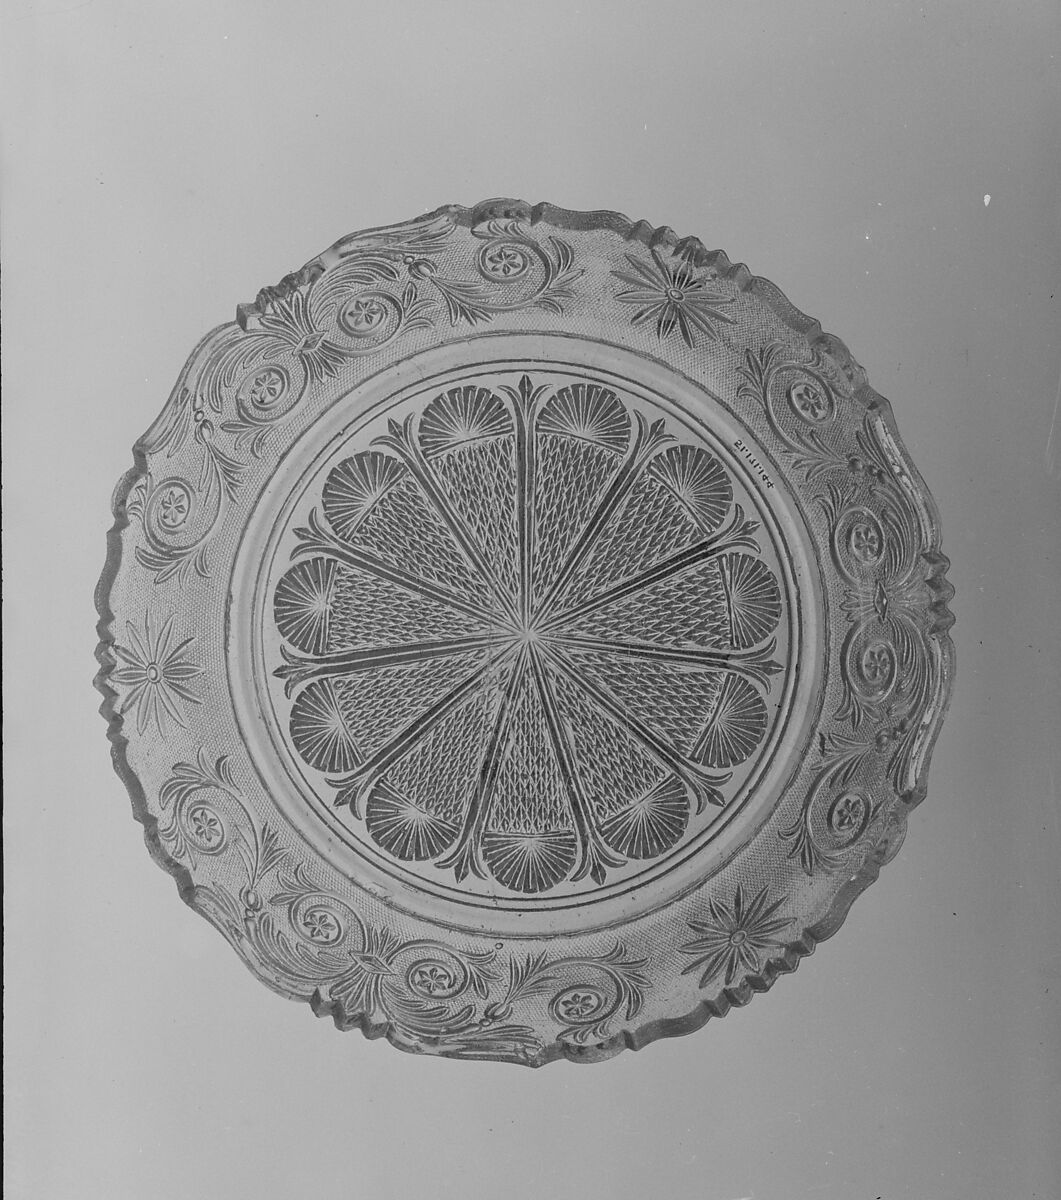 Bowl, Possibly Cristalleries de Saint-Louis, Lacy pressed glass 